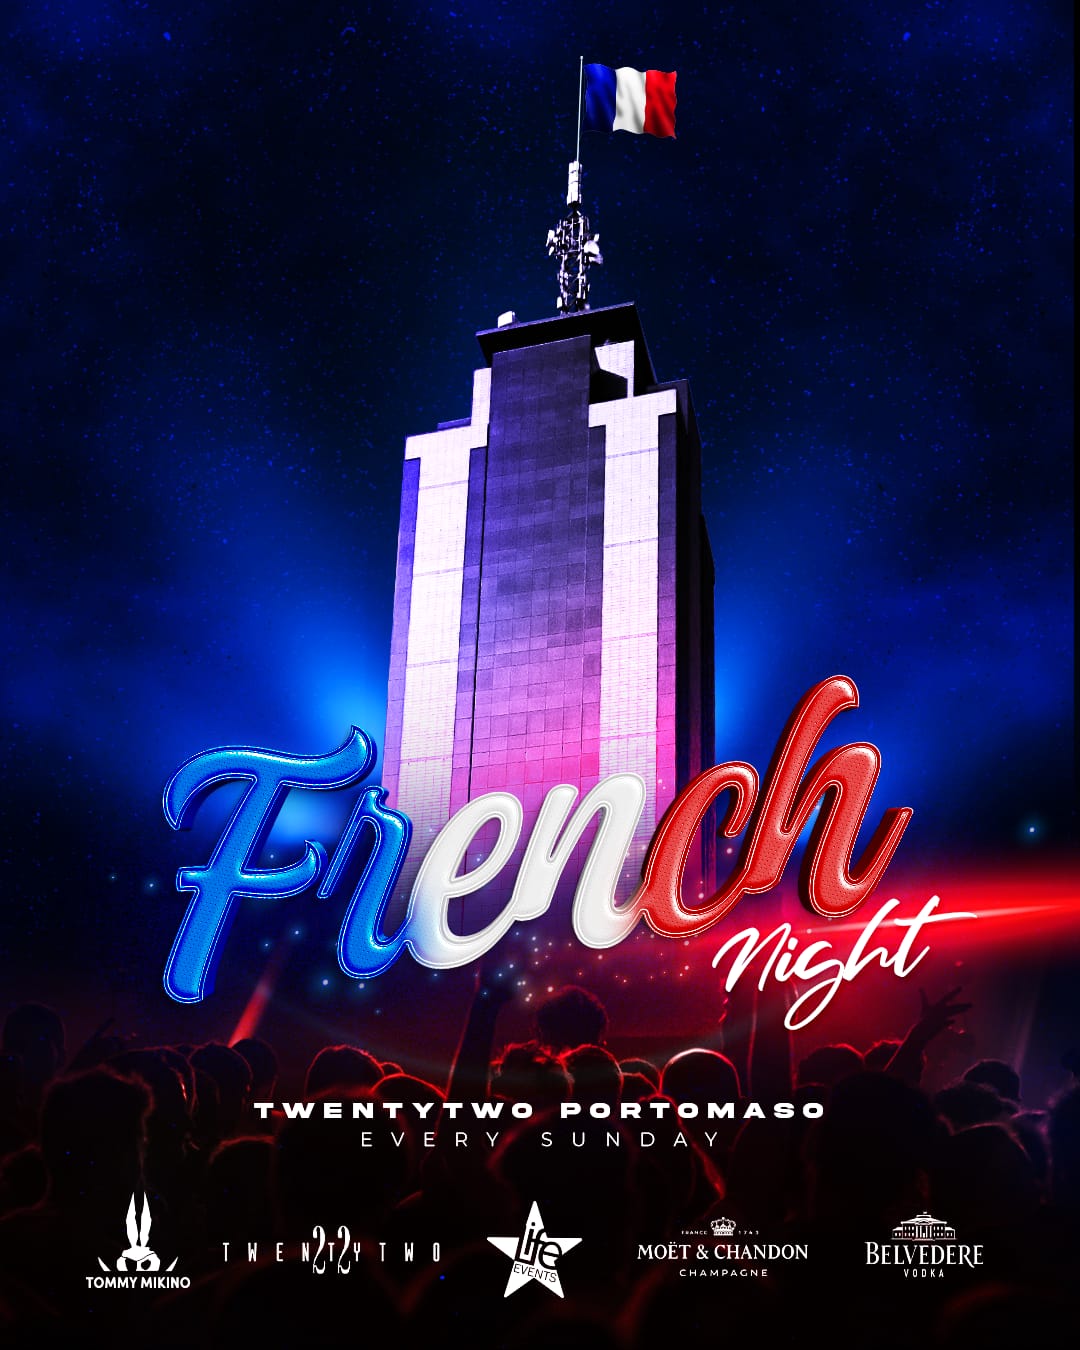 TwentyTwo French Night poster